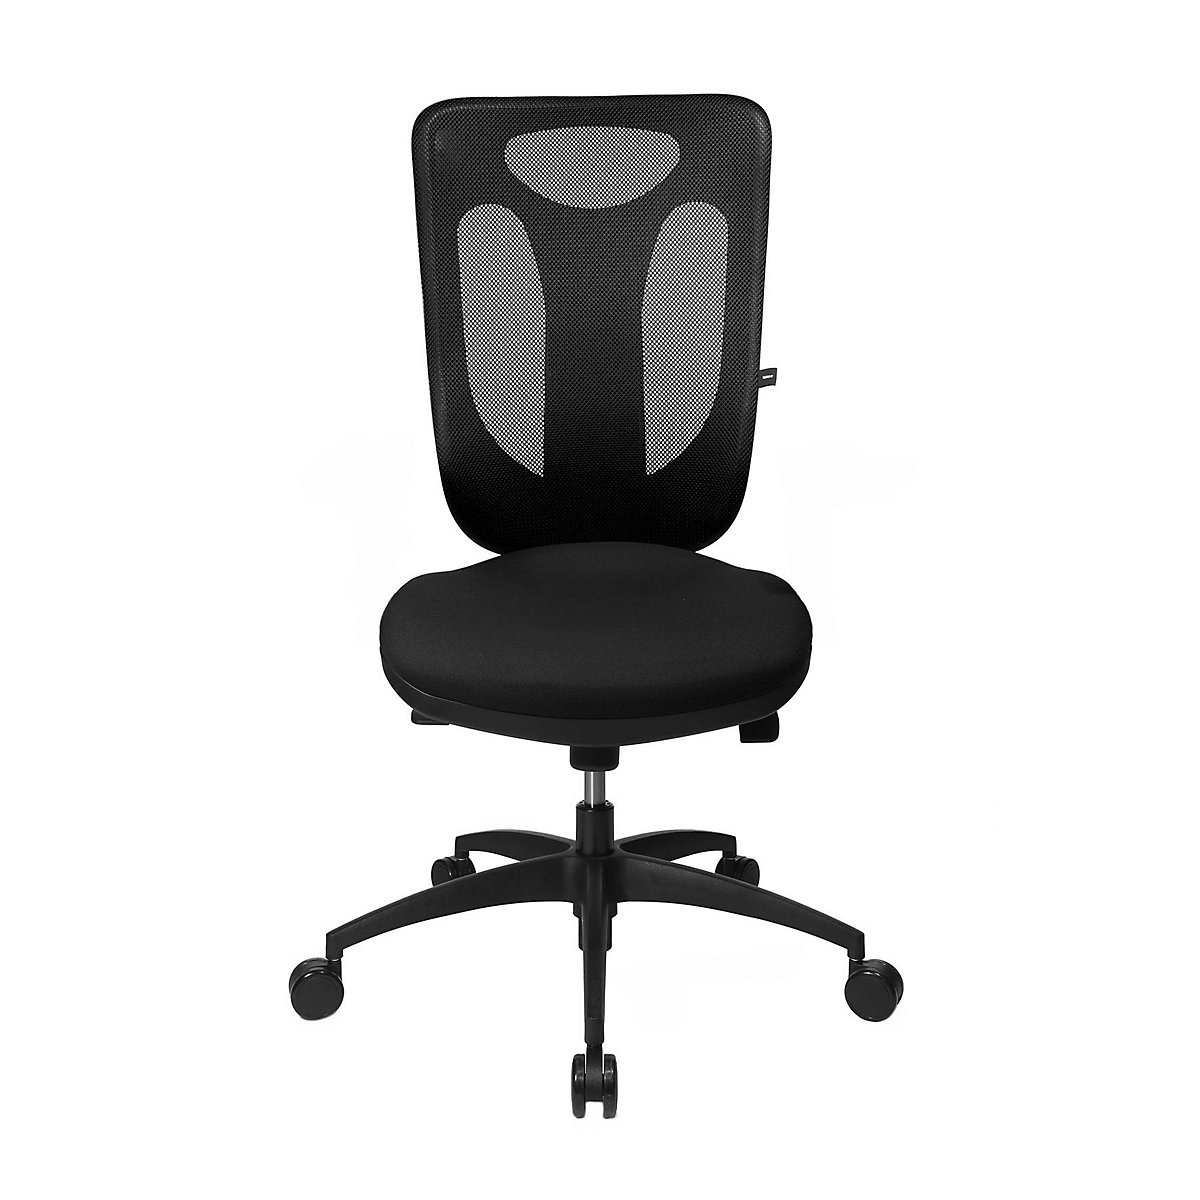 Ergonomic swivel chair, synchronous mechanism, ergonomic seat - Topstar